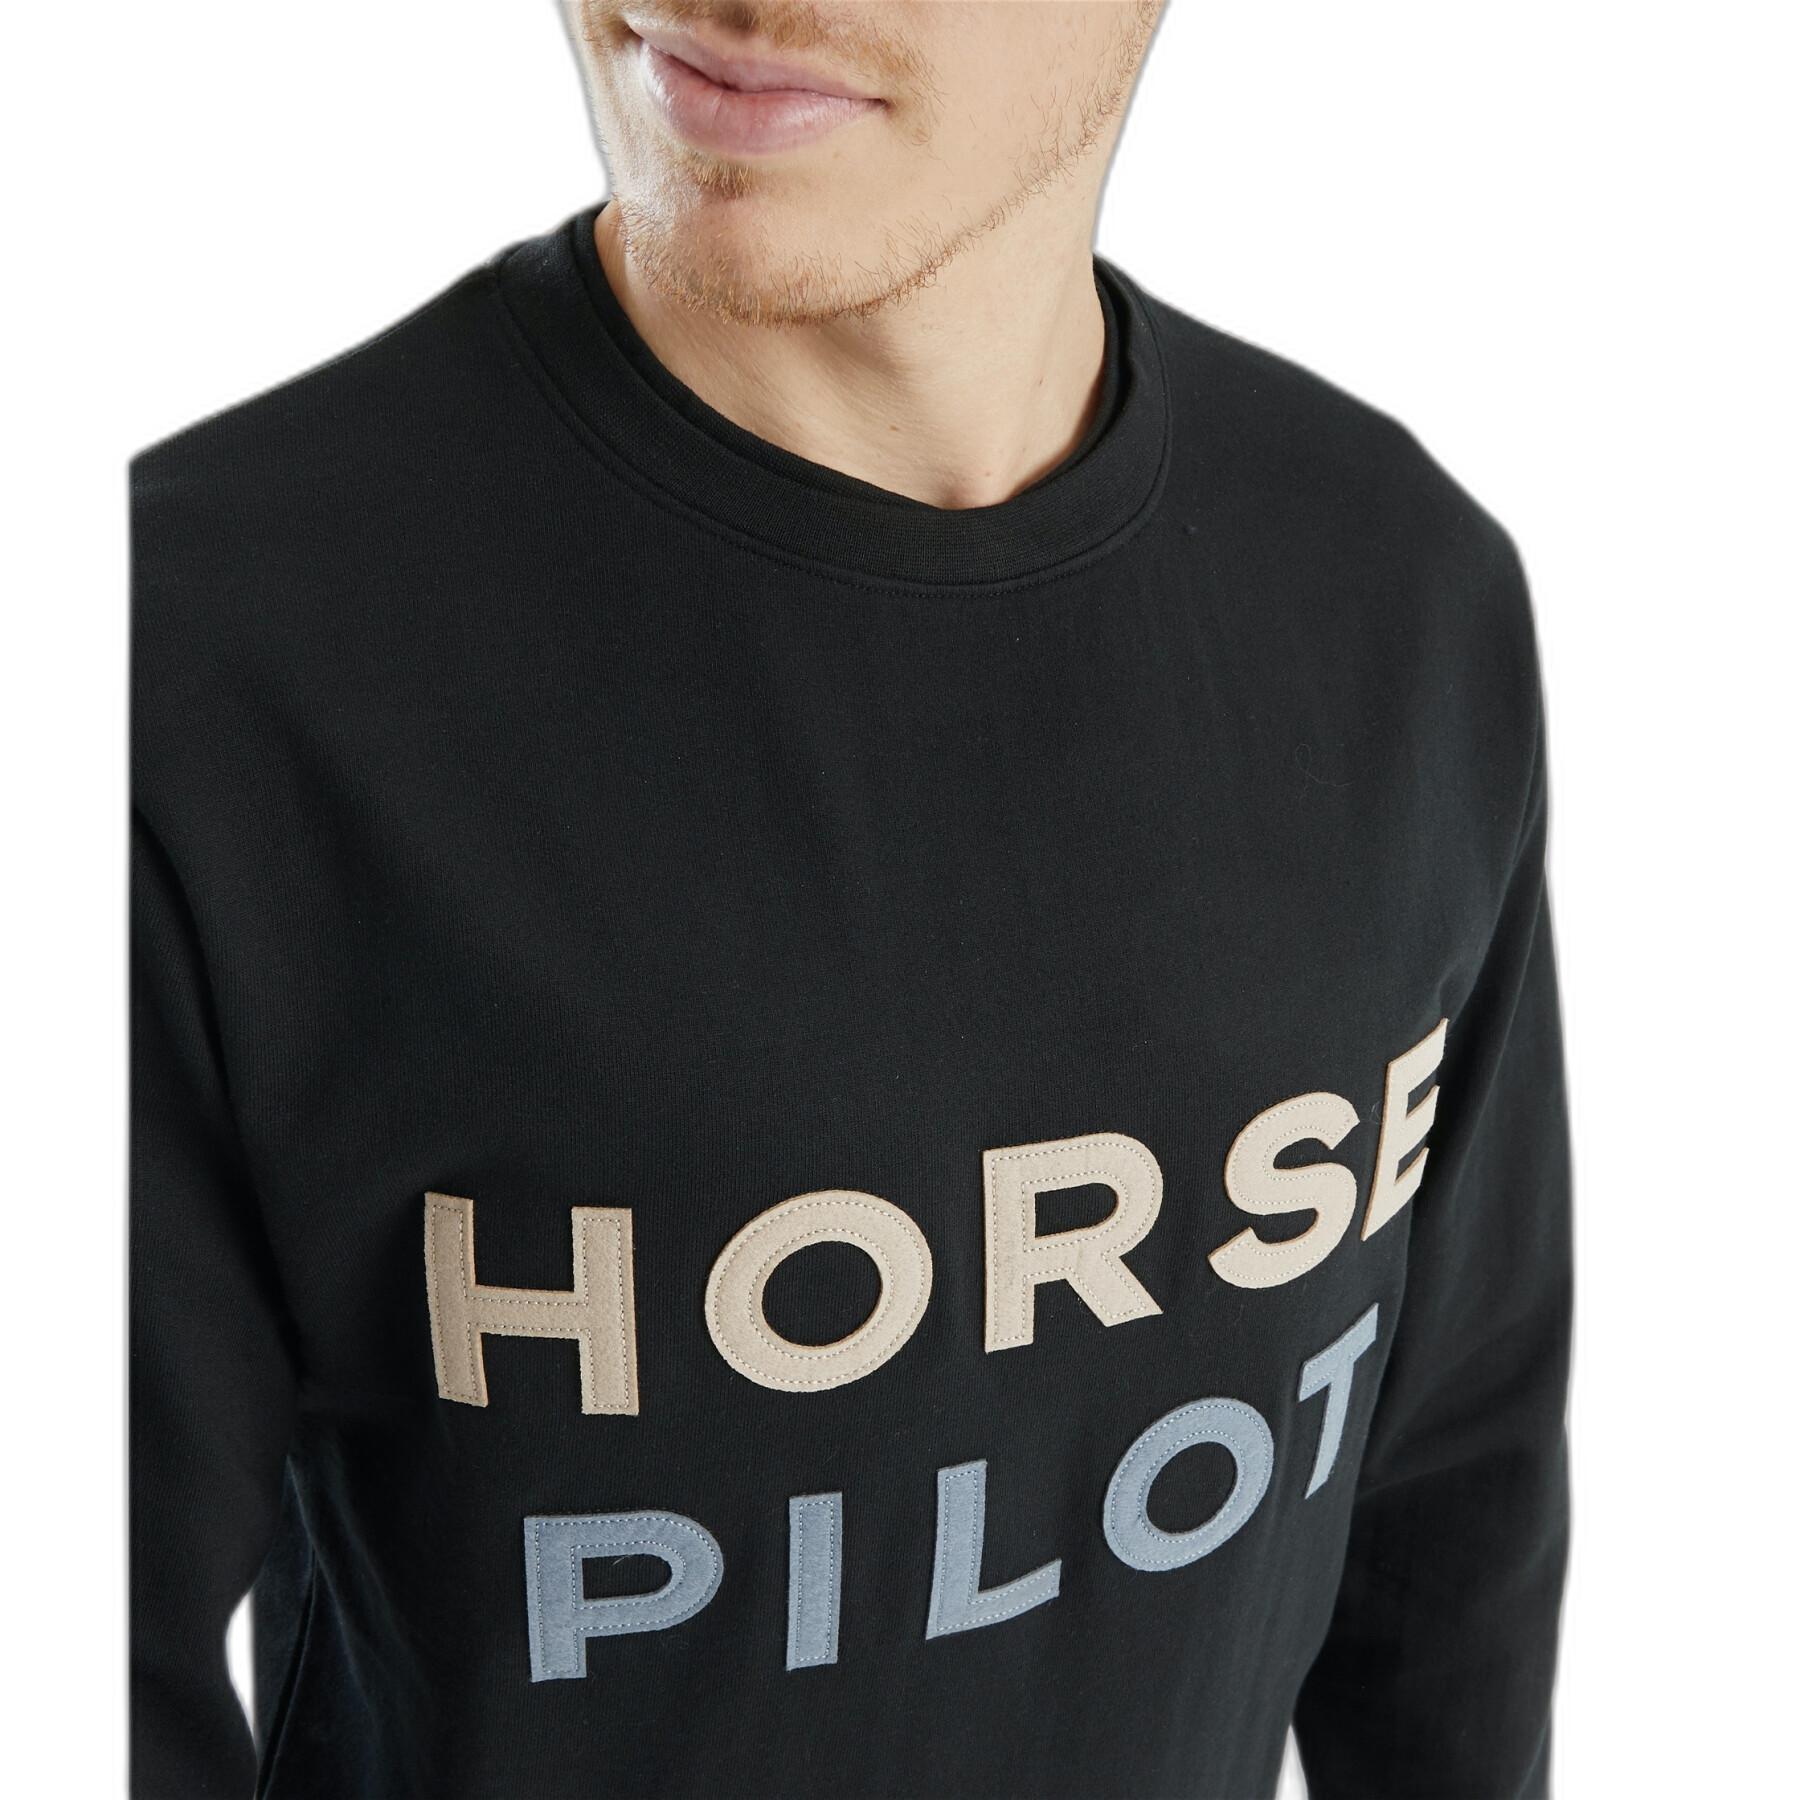 Sweatshirt équitation Horse Pilot Team